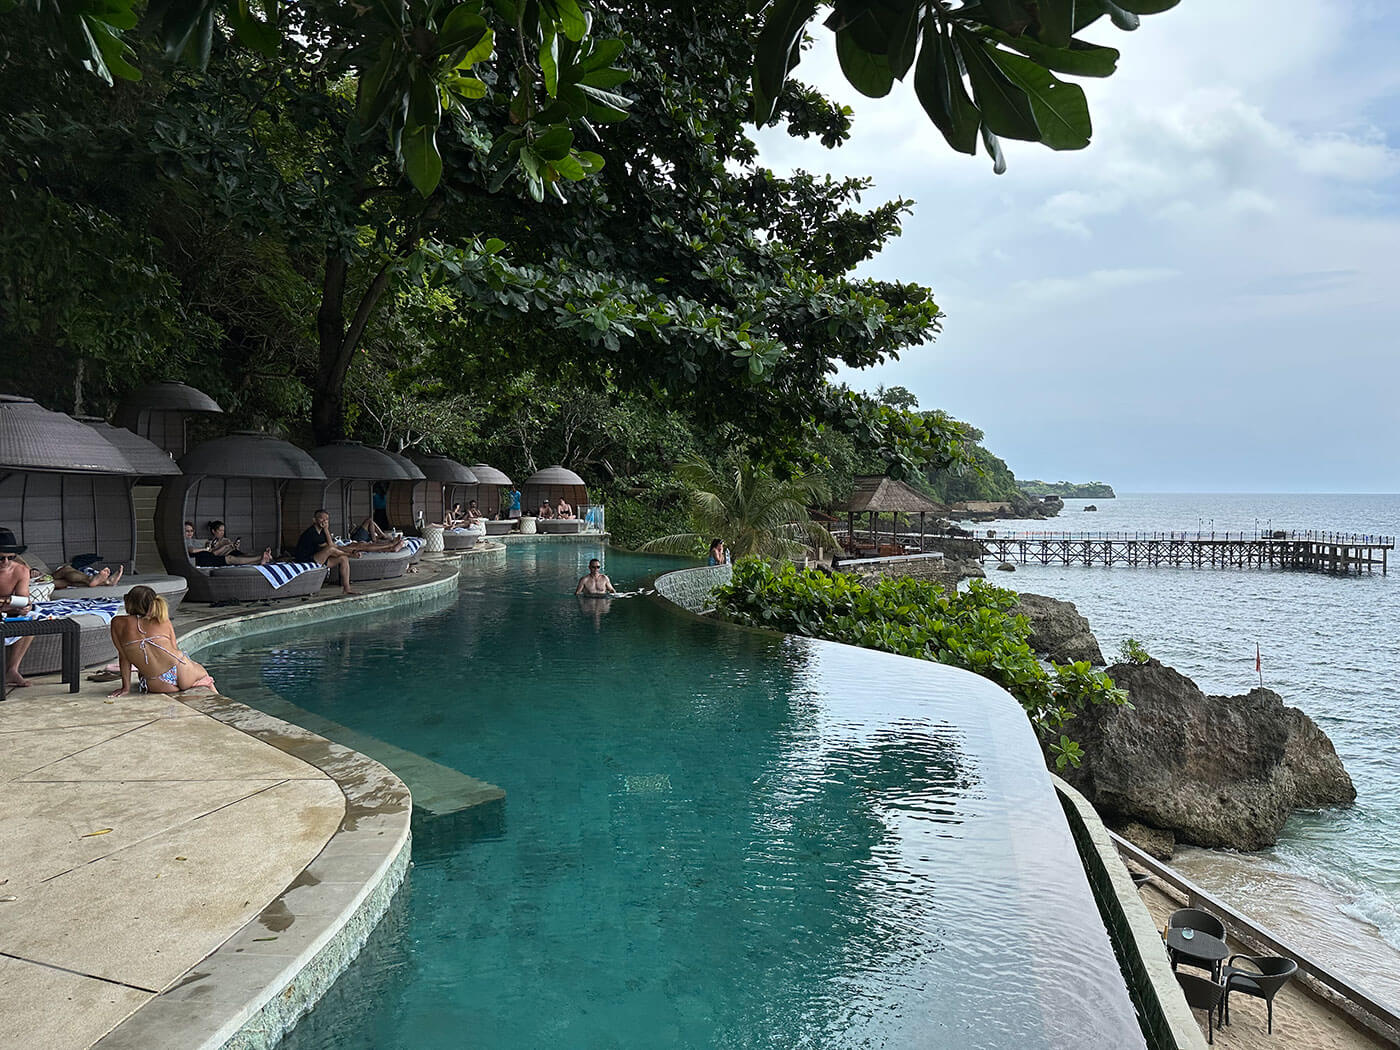 Ayana Bali